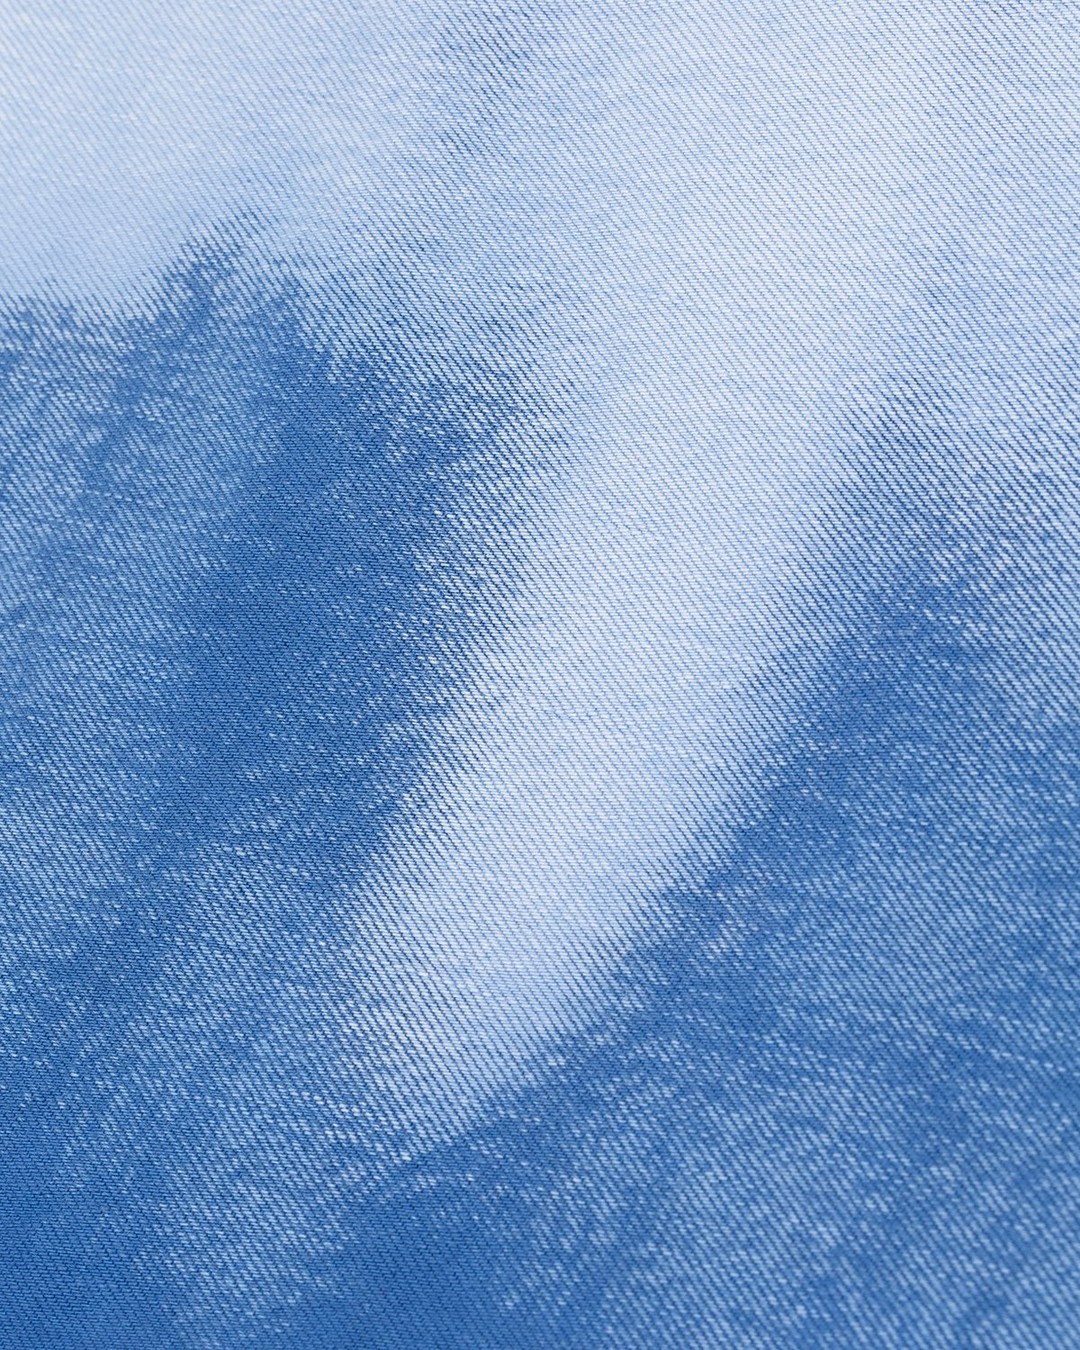 Acne Studios – Bleached Face Tote Bag Denim Blue - Tote Bags - Blue - Image 5